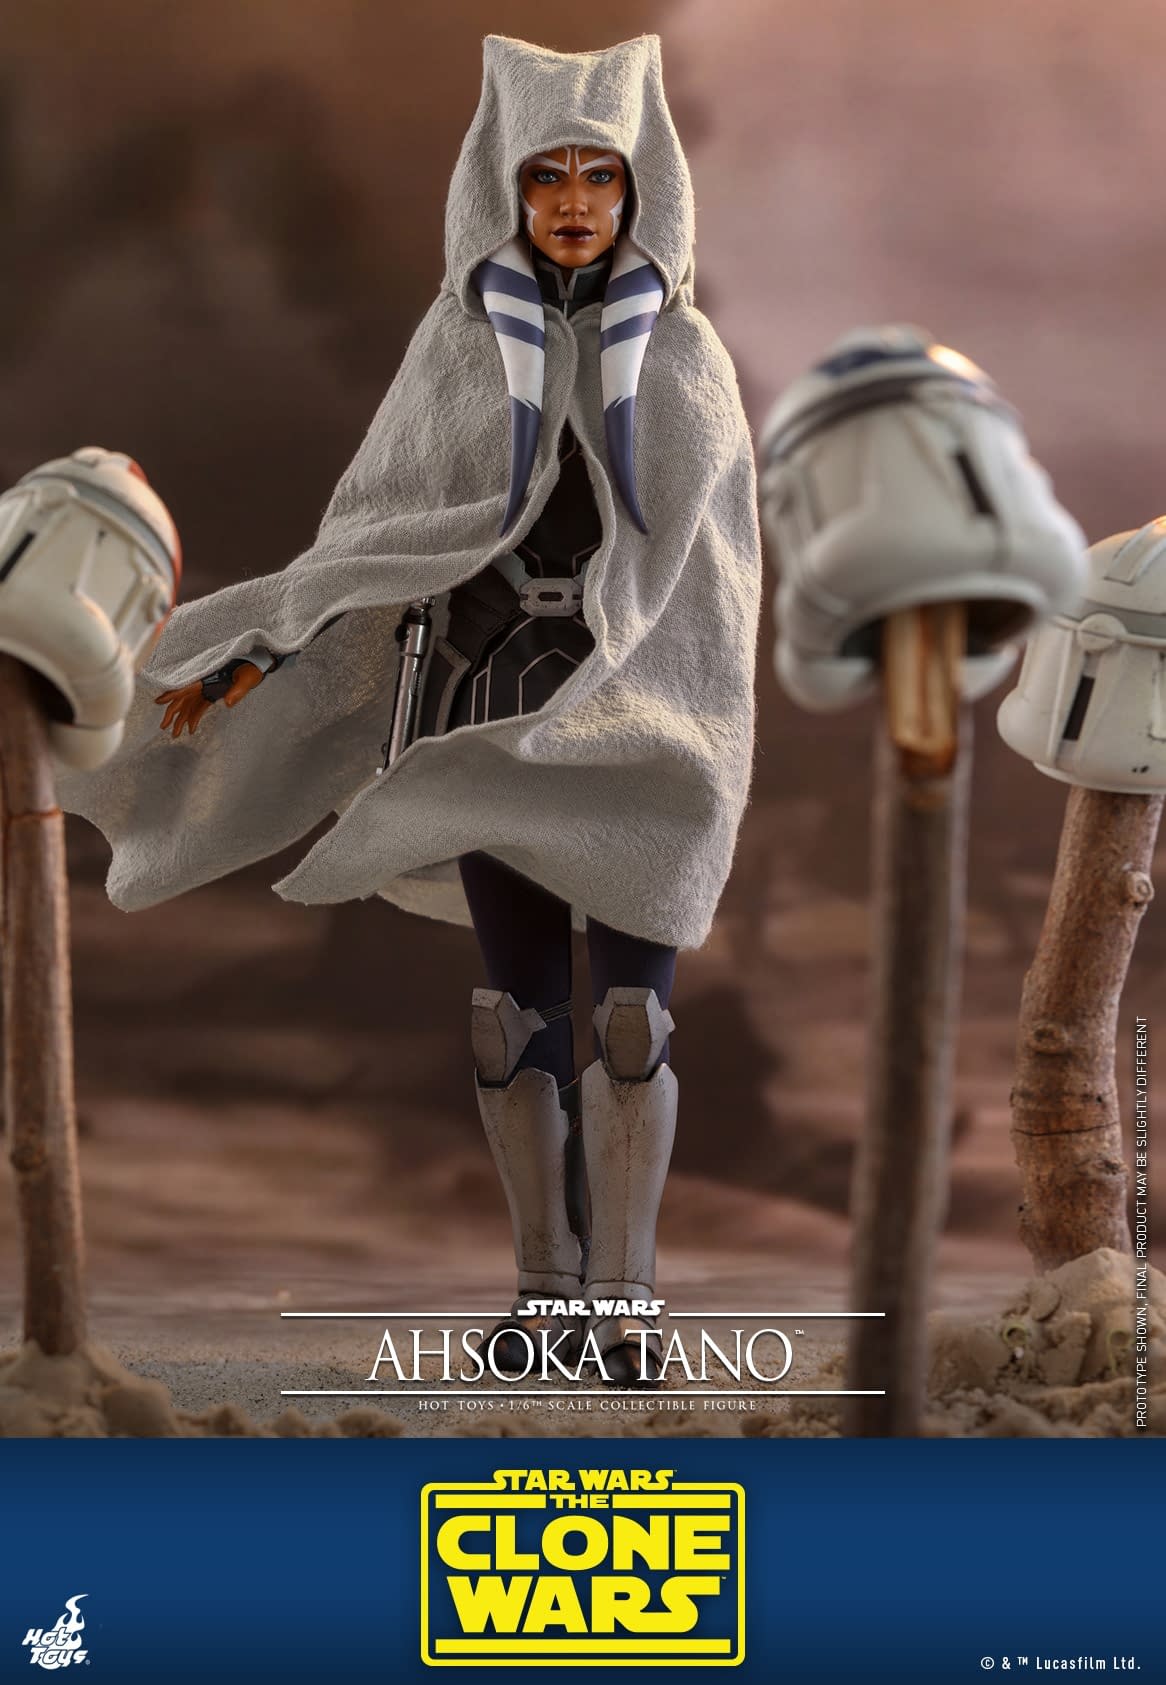 Hot Toys Reveals Brand New Ahsoka Tano Figure Inspired by Disney Plus  Series - Star Wars News Net